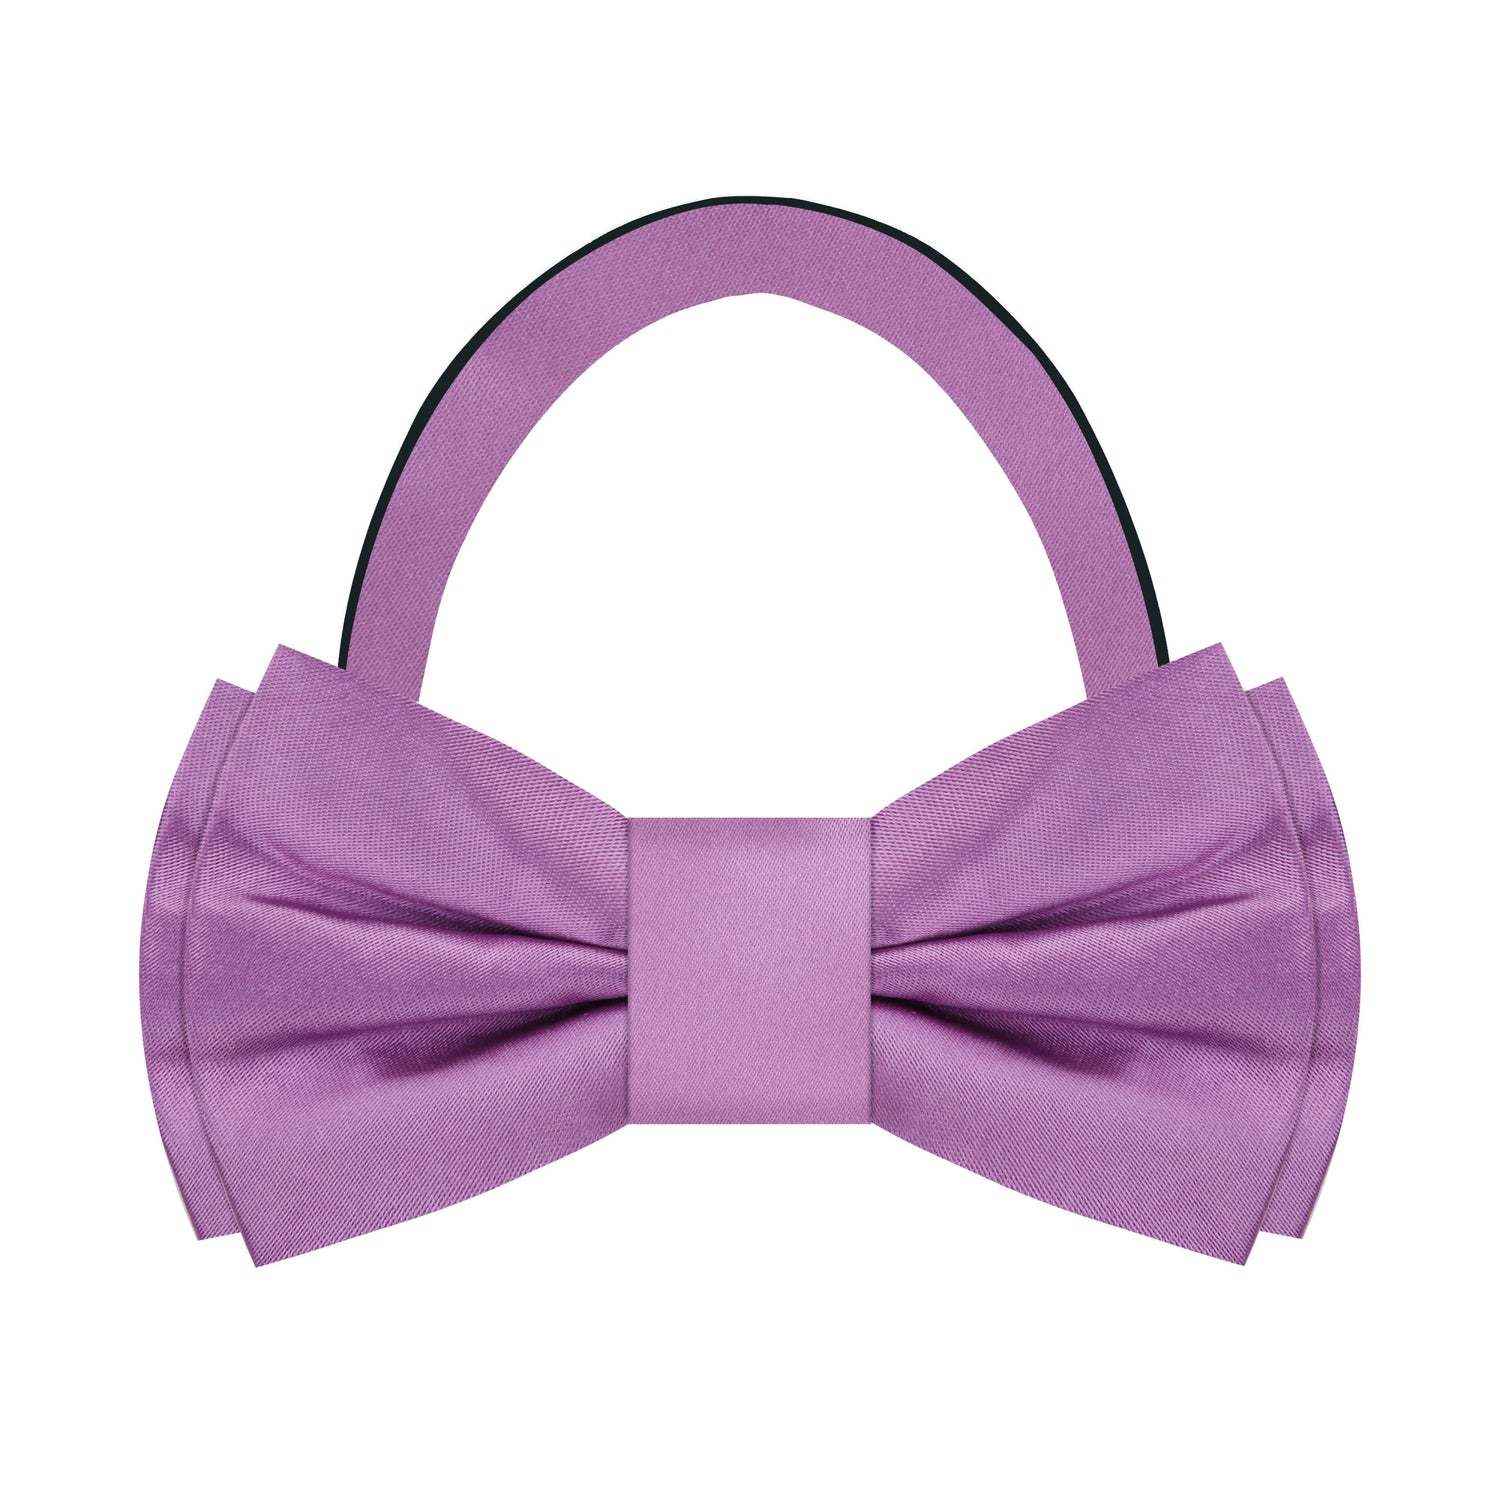 Pre Tied: Heather Purple Bow Tie 